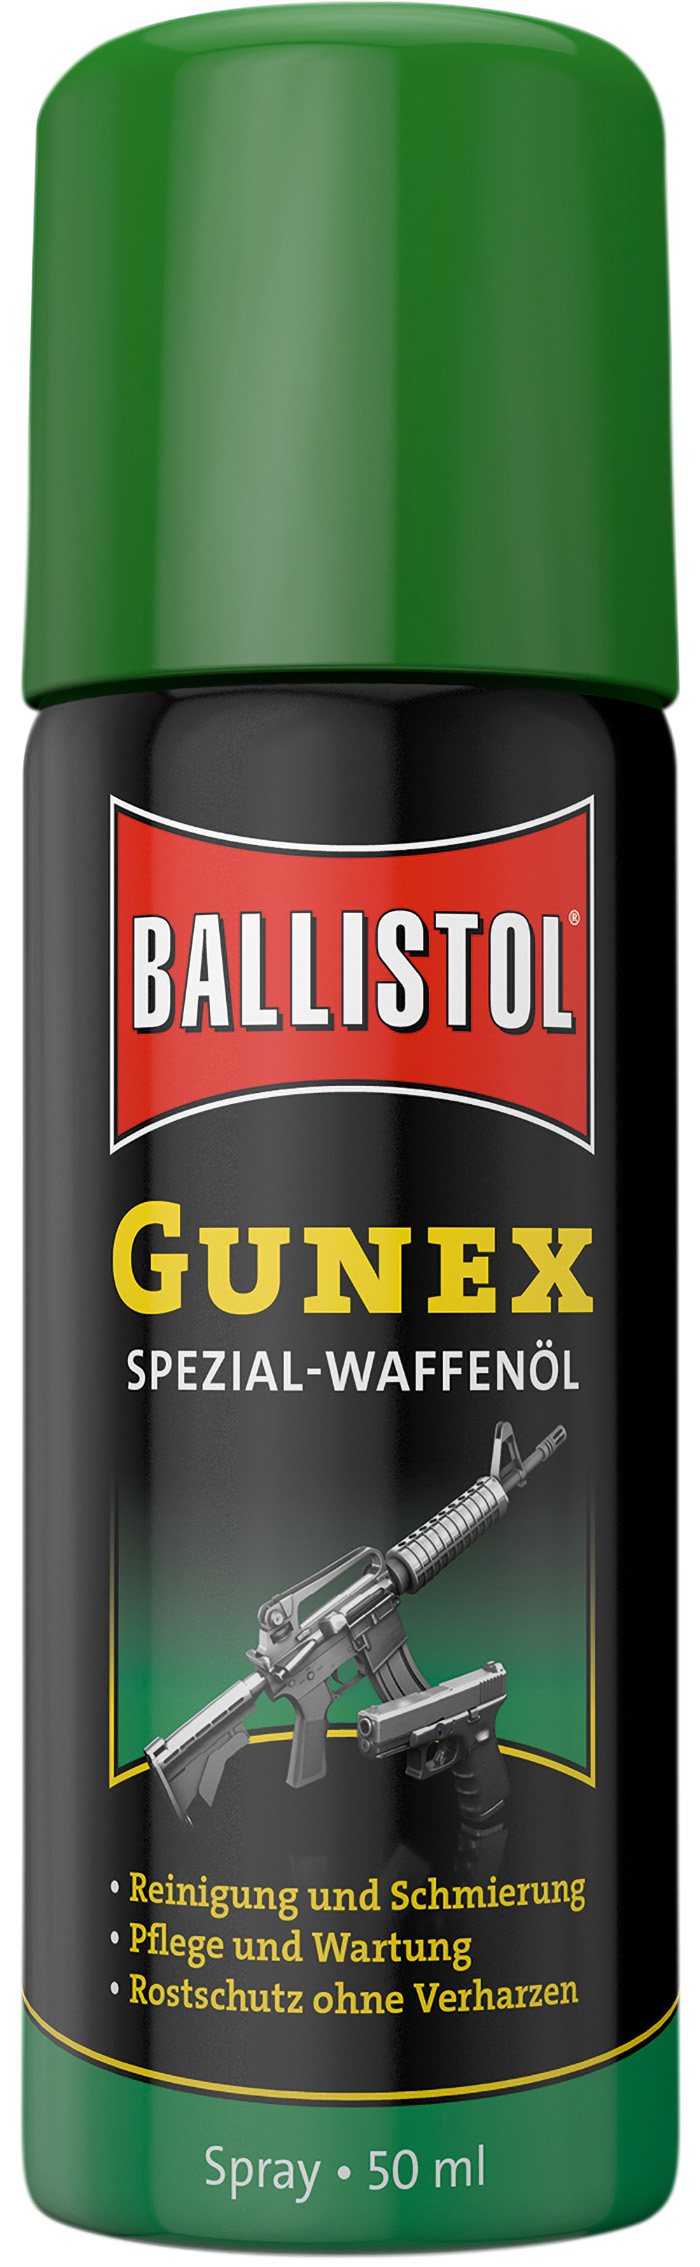 Ballistol GunEx Waffenöl Spray 50ml